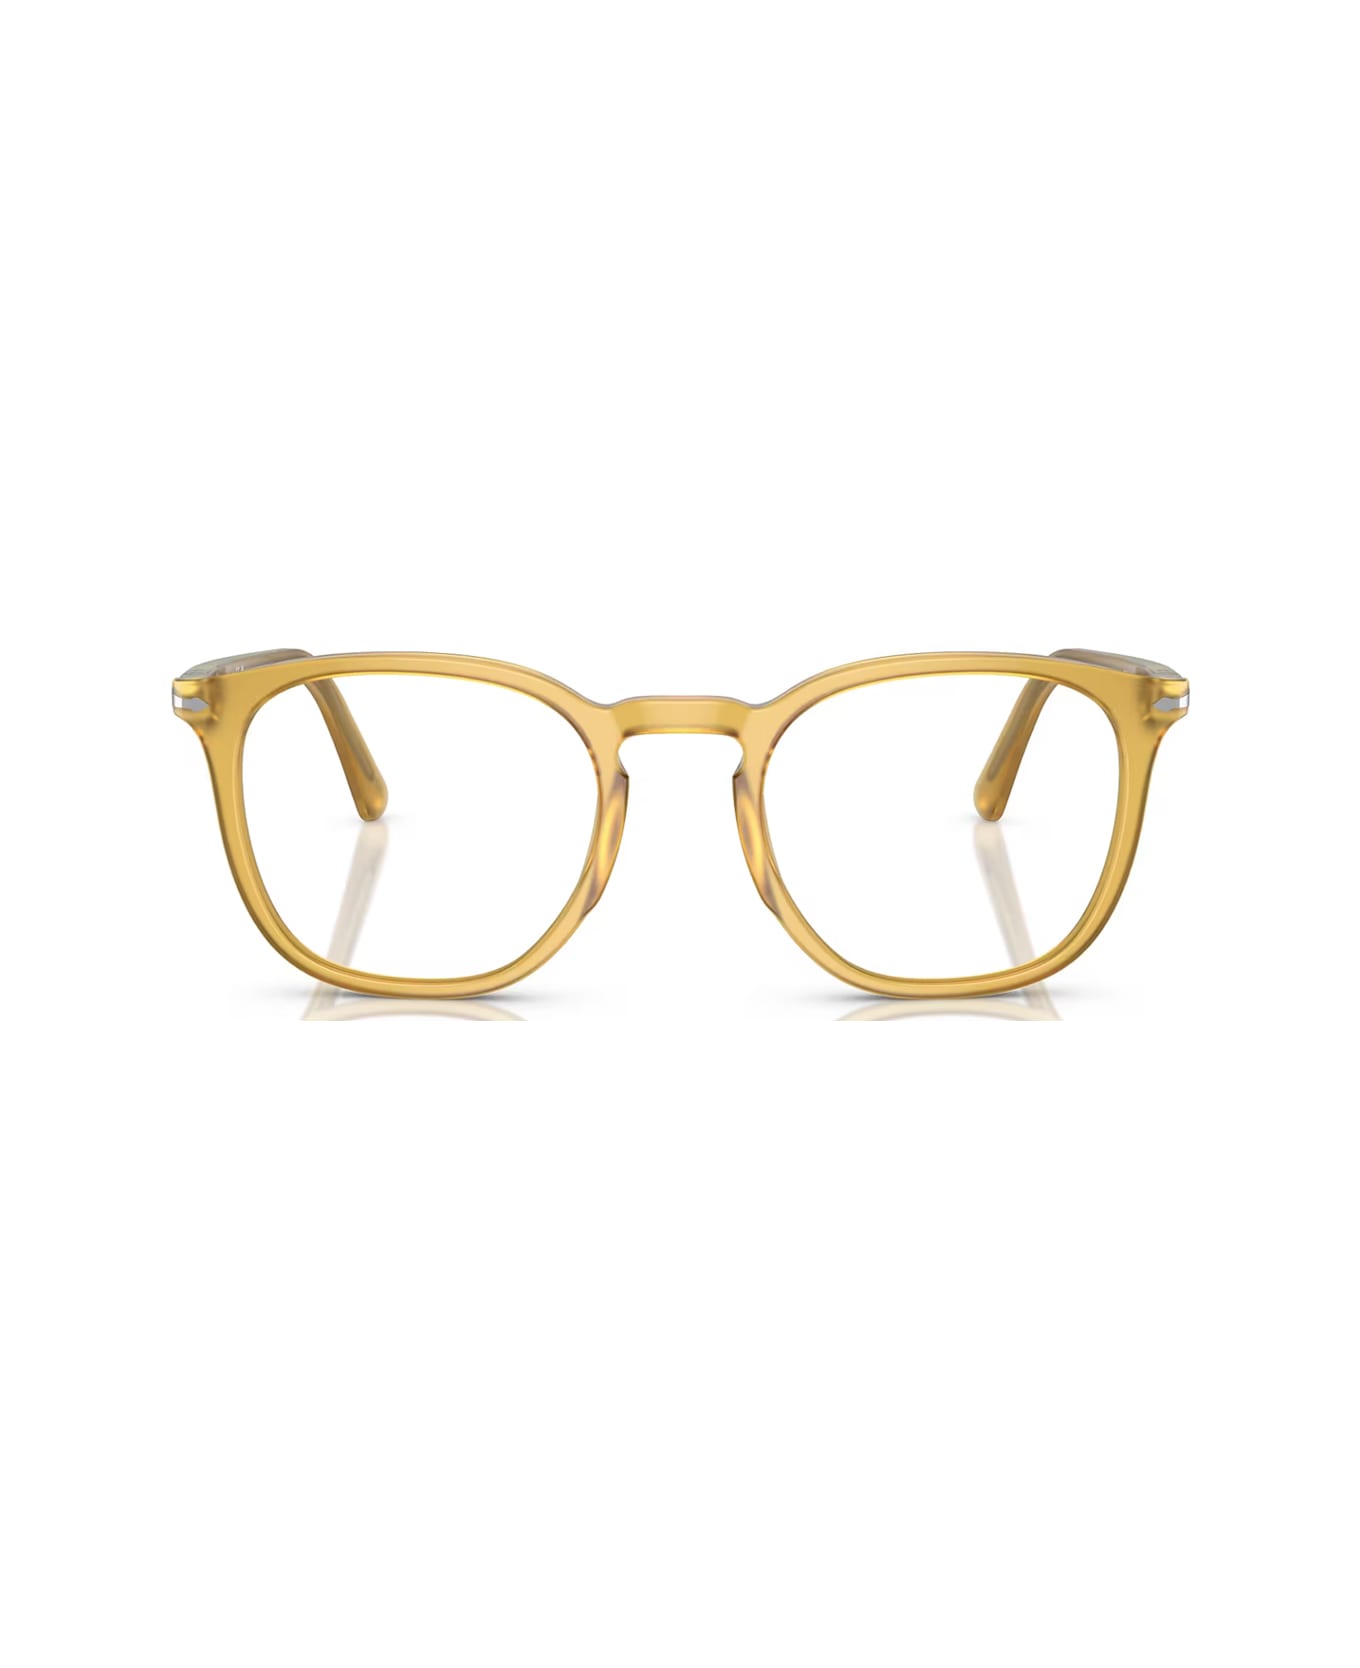 Persol Po3318v 204 Glasses - Beige アイウェア